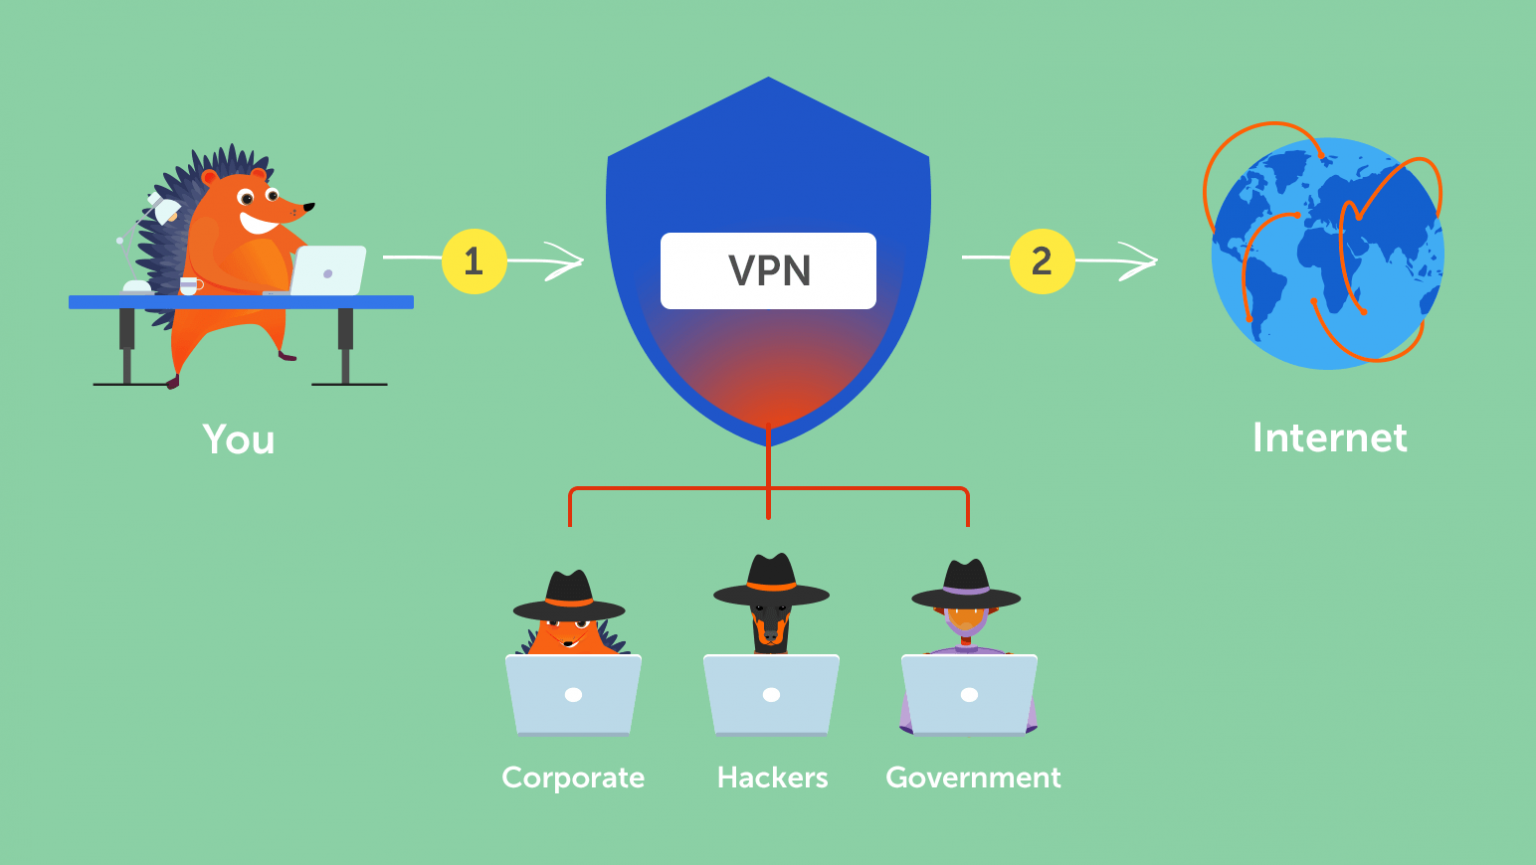 kali linux anonymous hacking tor vs vpn